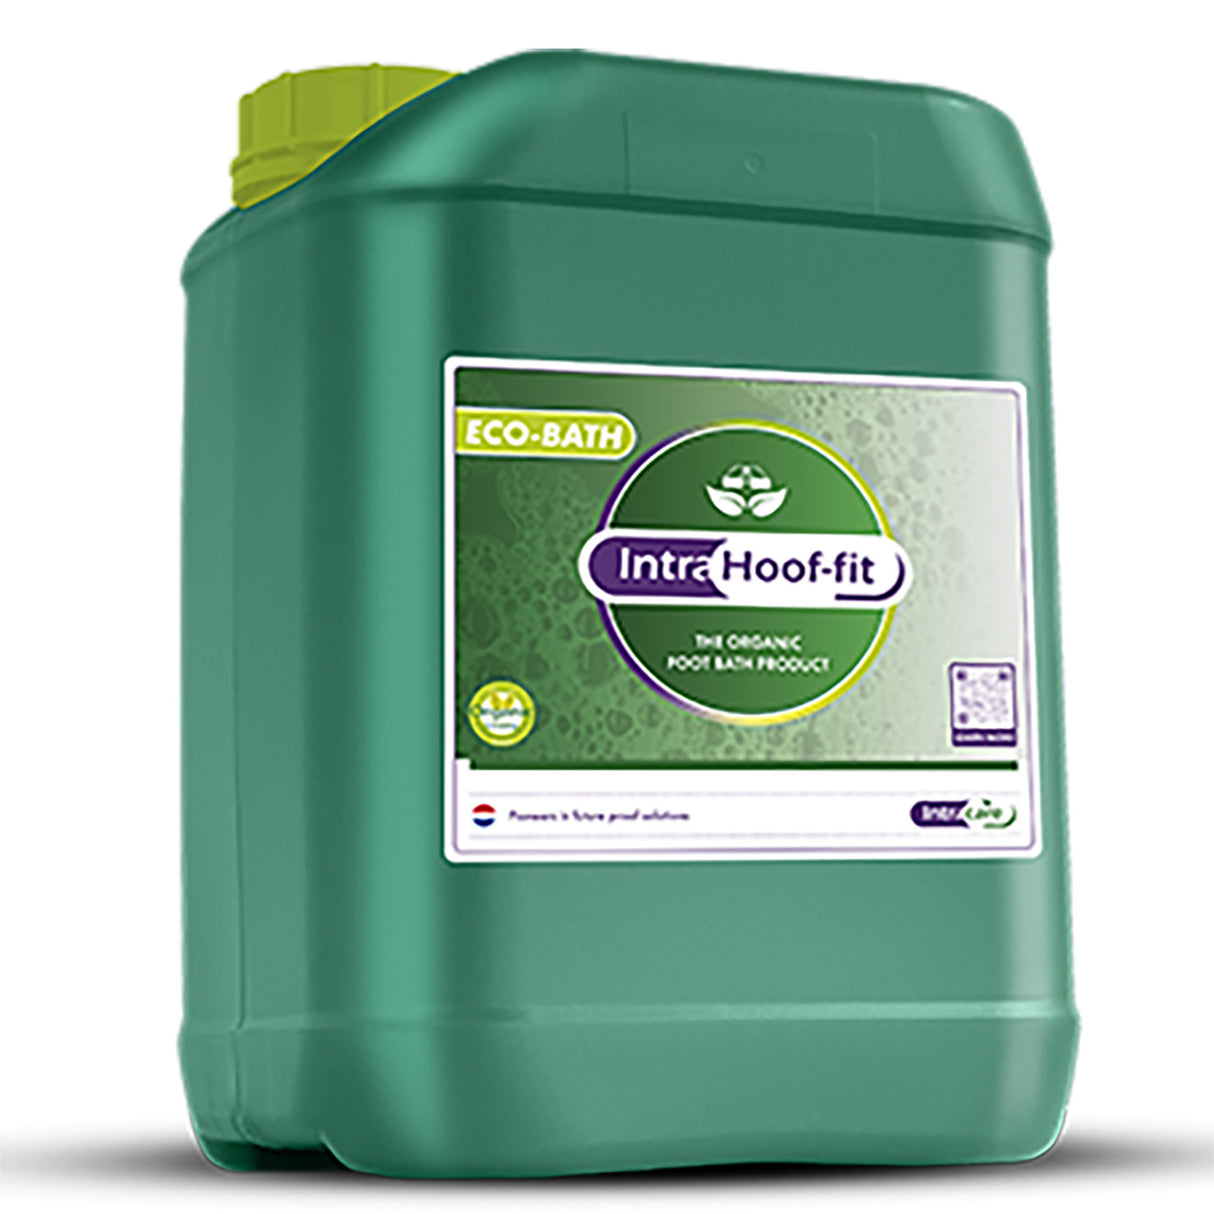 Intra Hoof-fit Eco-Bath 20 liter